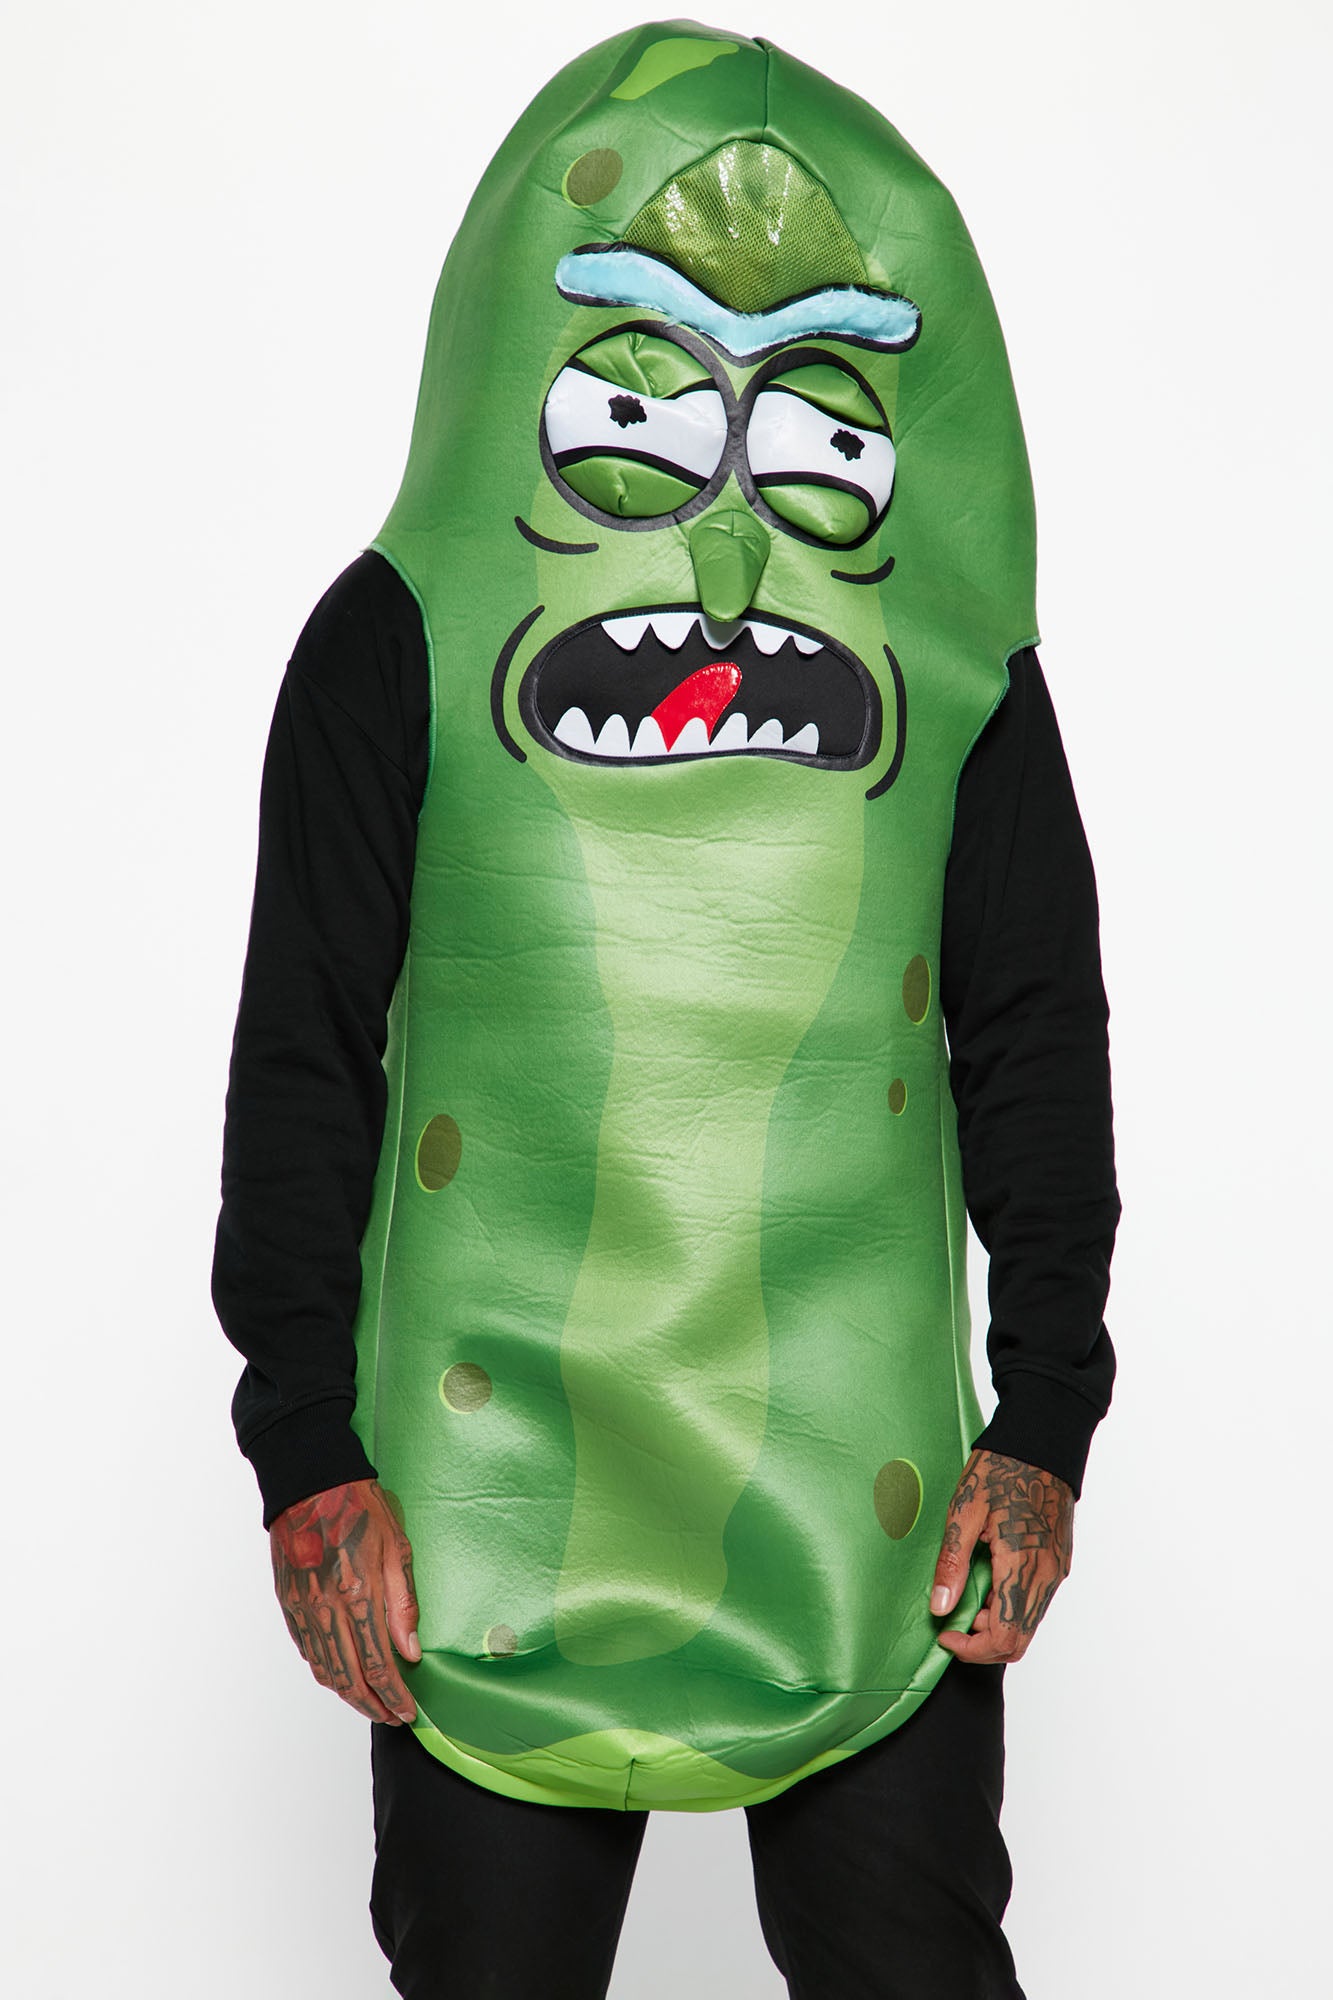 Pickle Rick Costume - Green